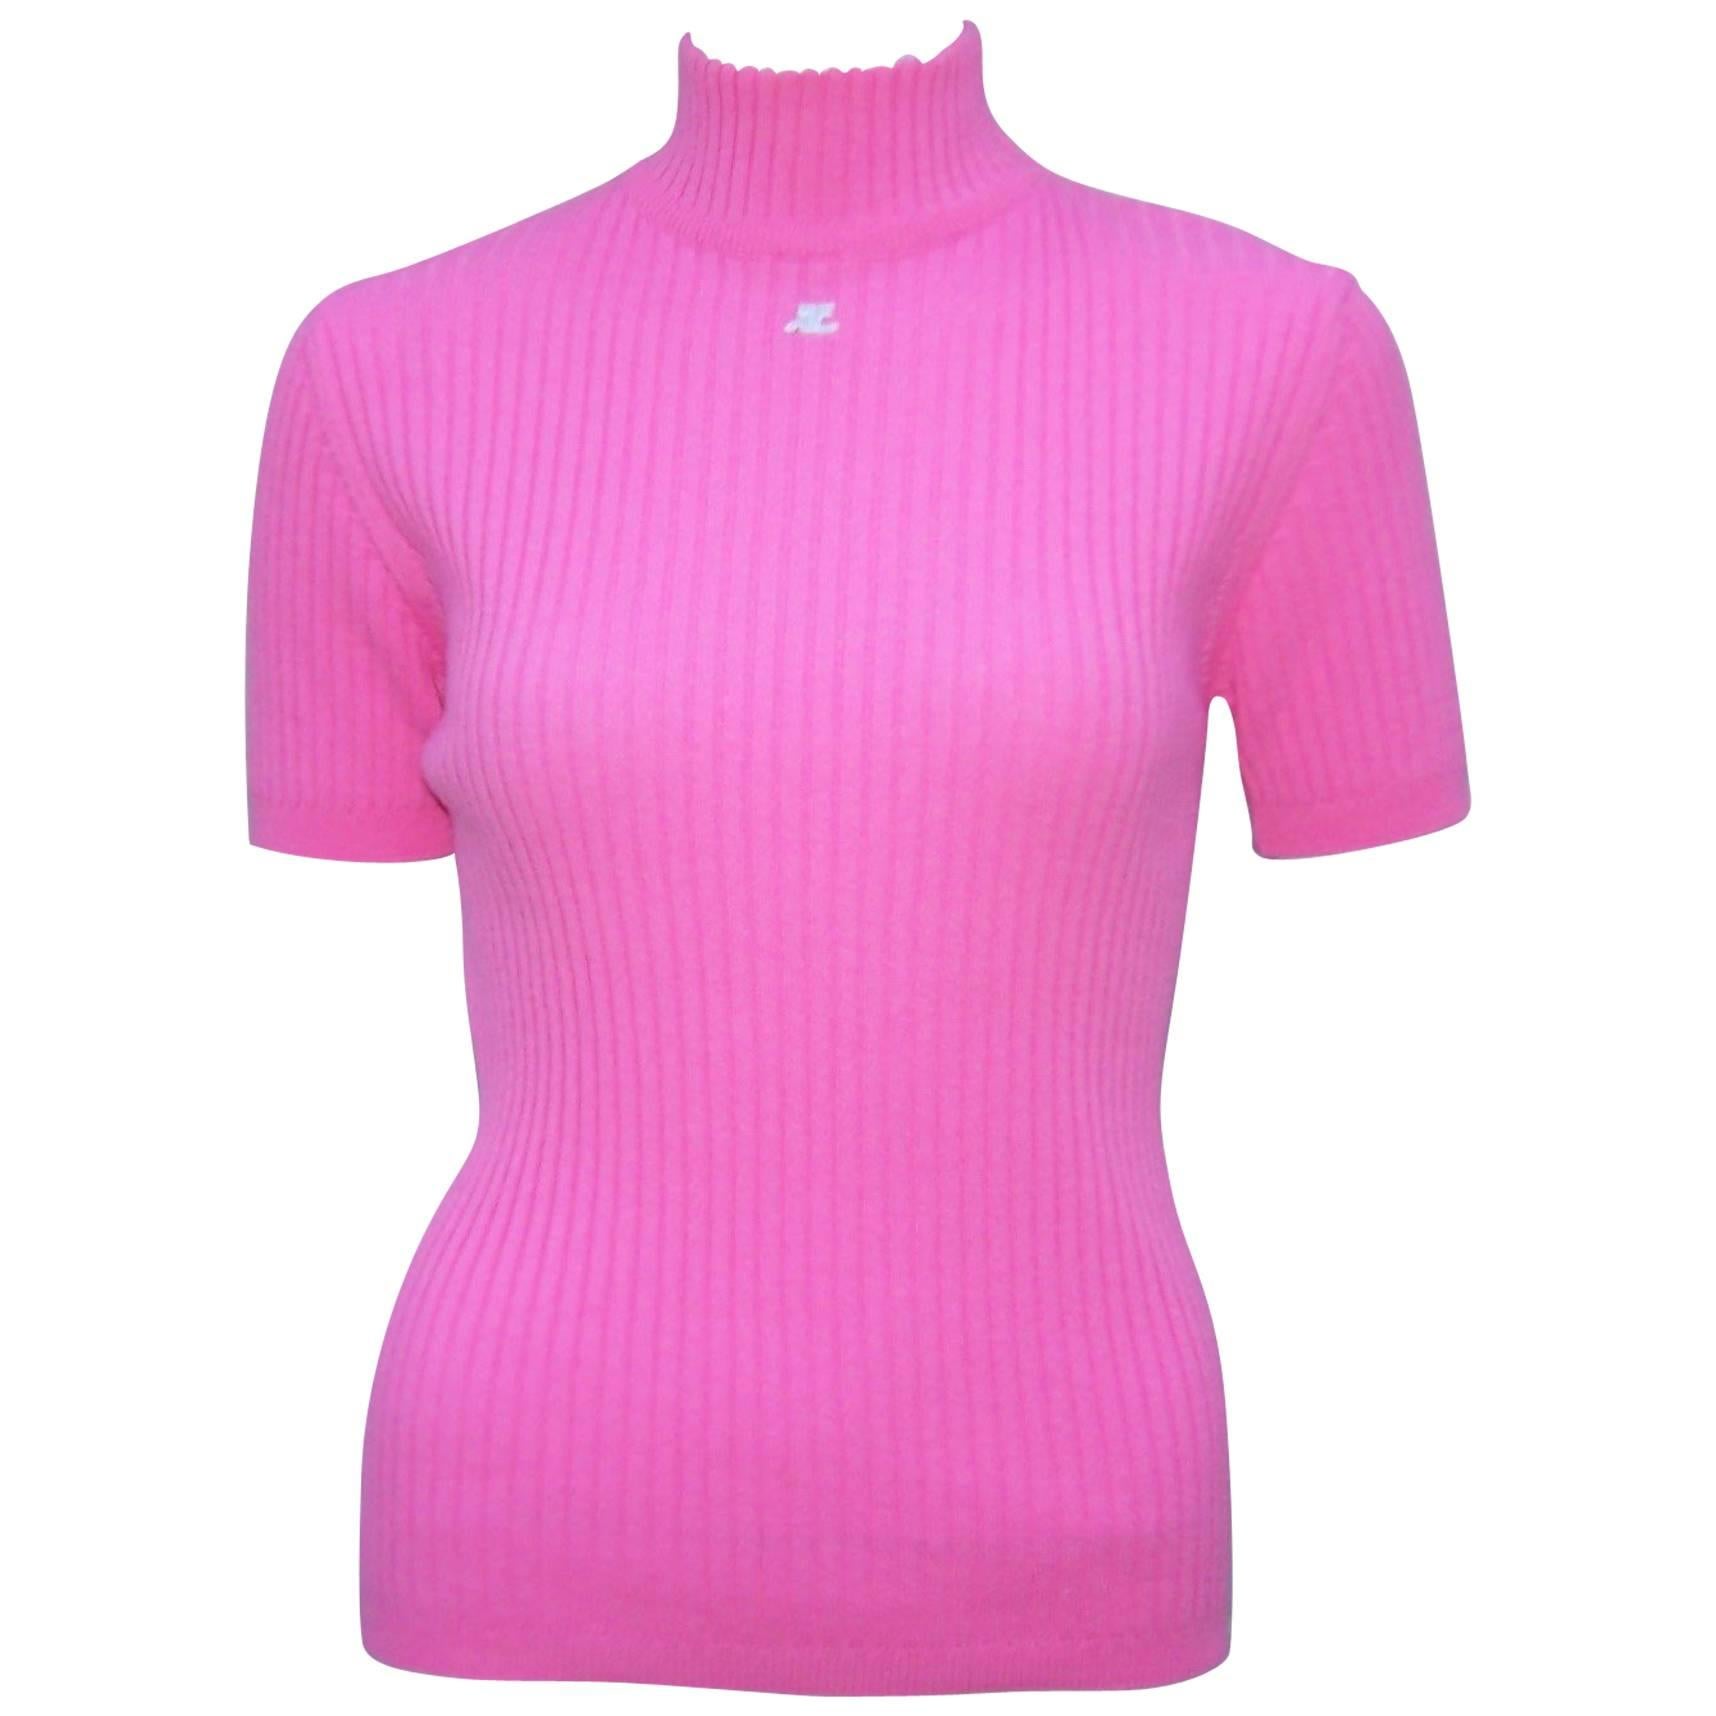 Mod 1990's Courreges Hot Pink Turtleneck Sweater Top